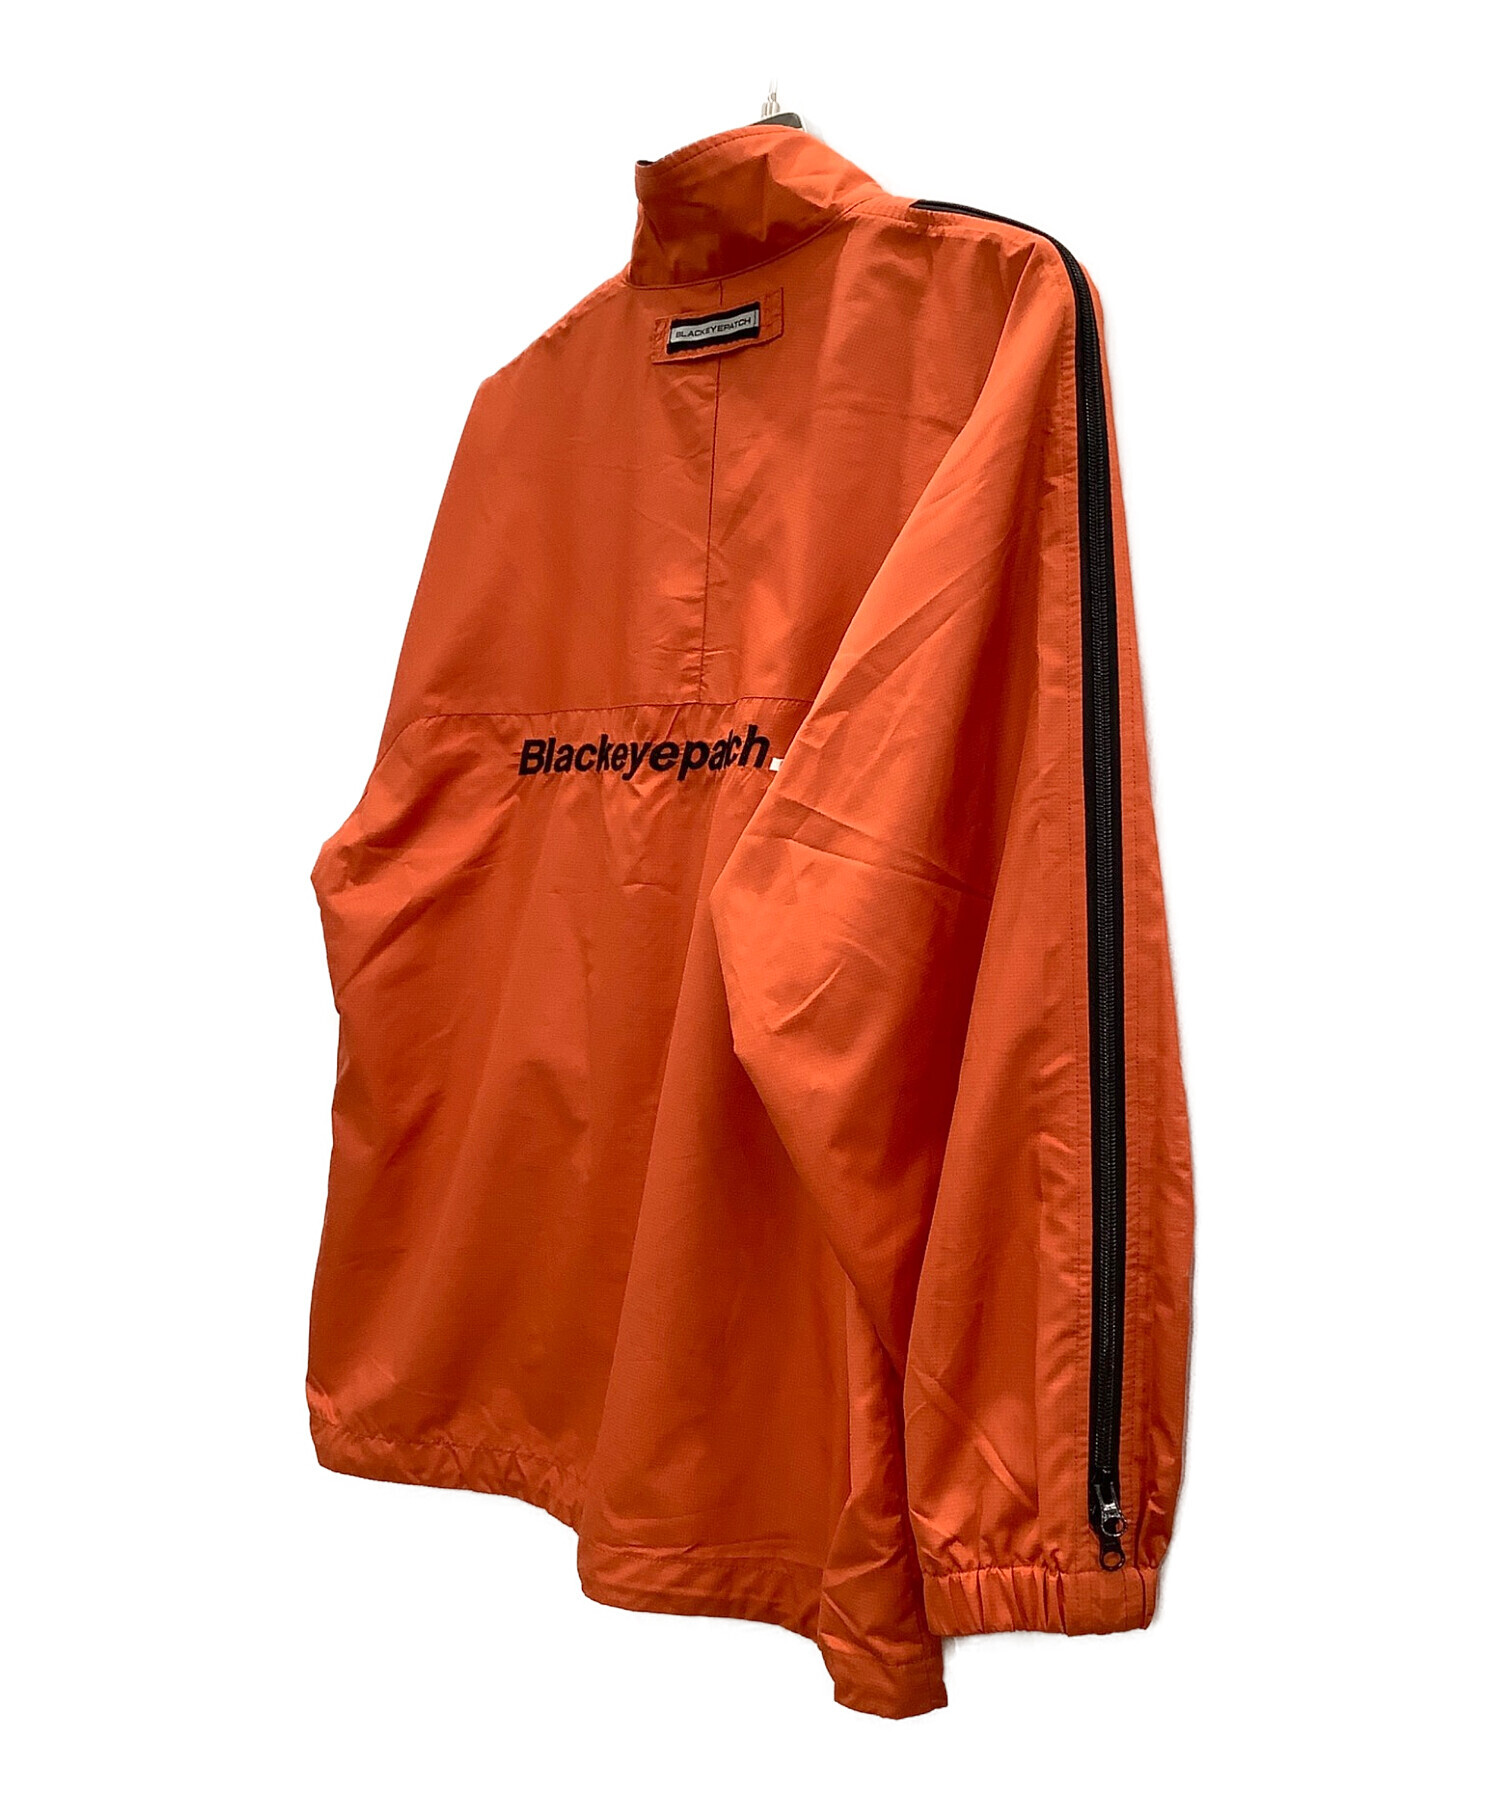 BlackEyePatch (ブラックアイパッチ) ナイロンジャケット オレンジ サイズ:M